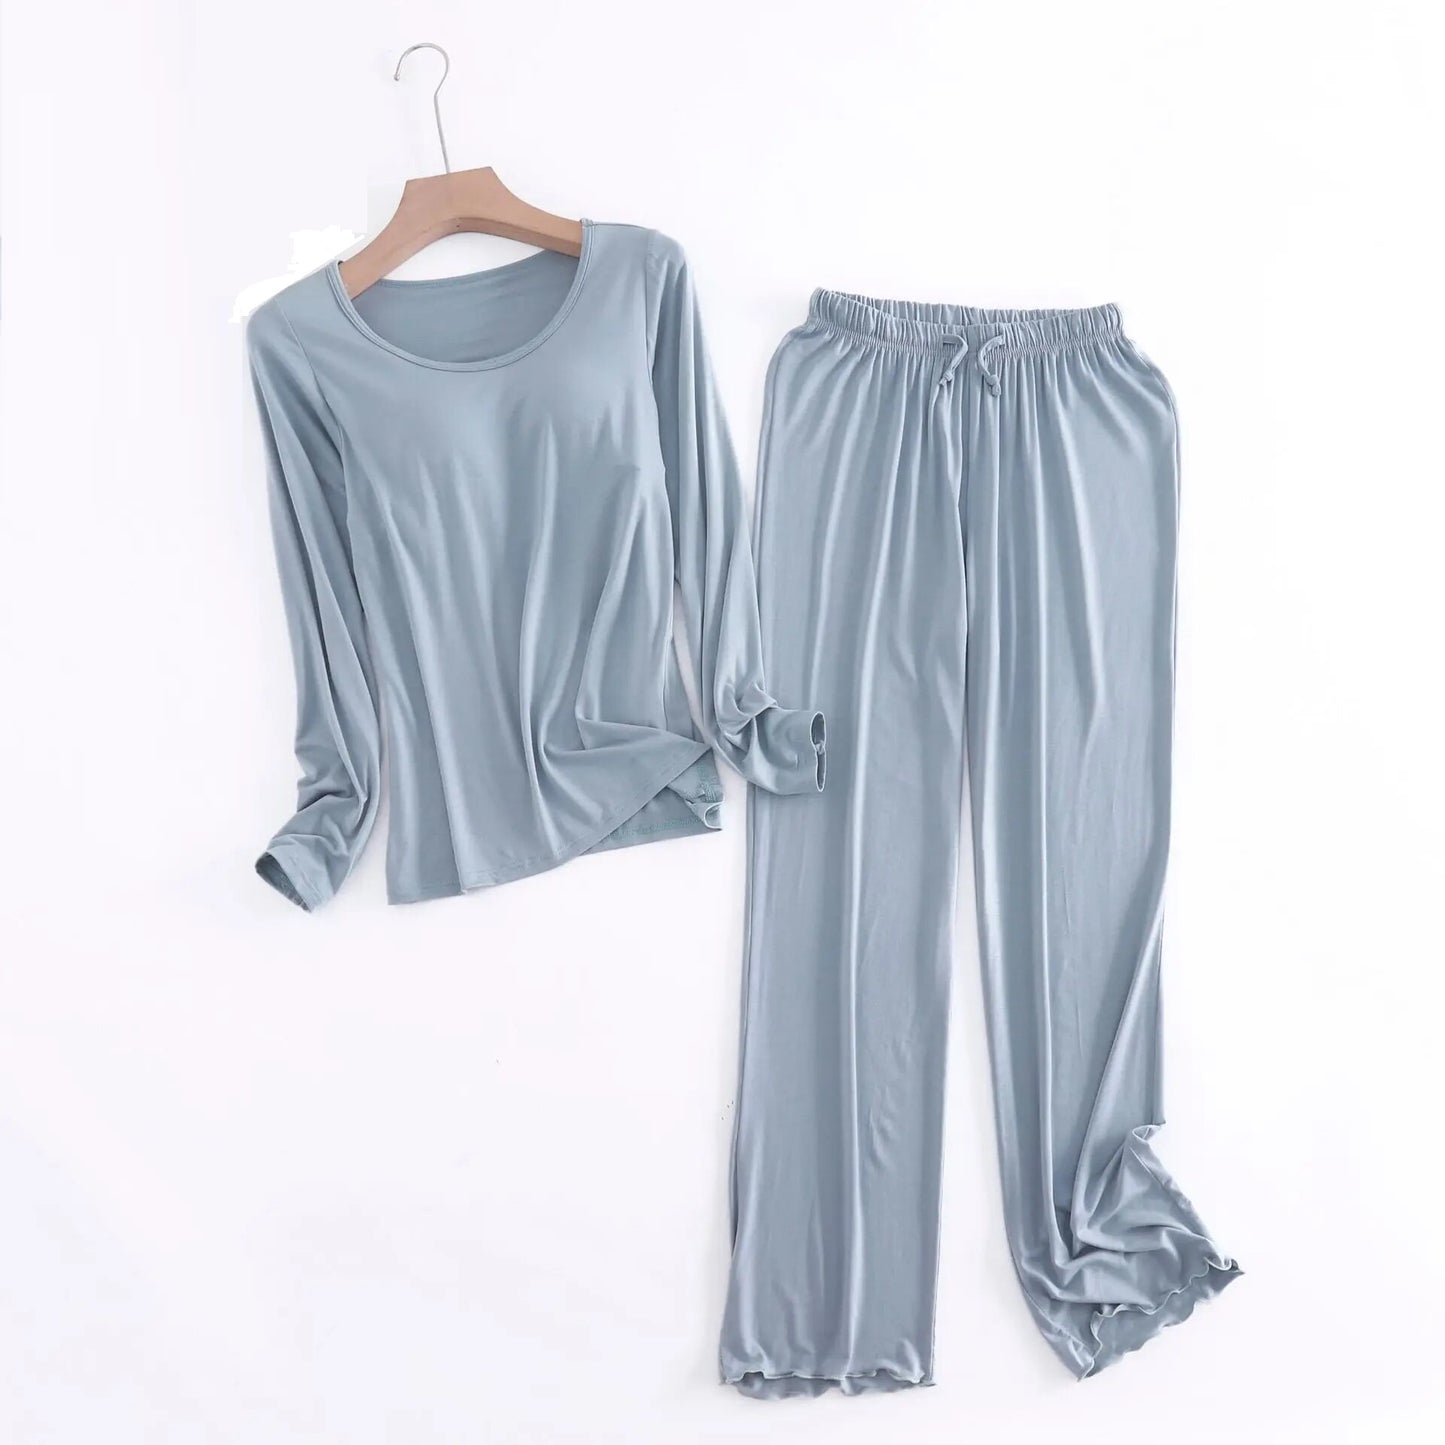 Two Piece Long Sleeve with Built In Bra Loungewear Pyjamas